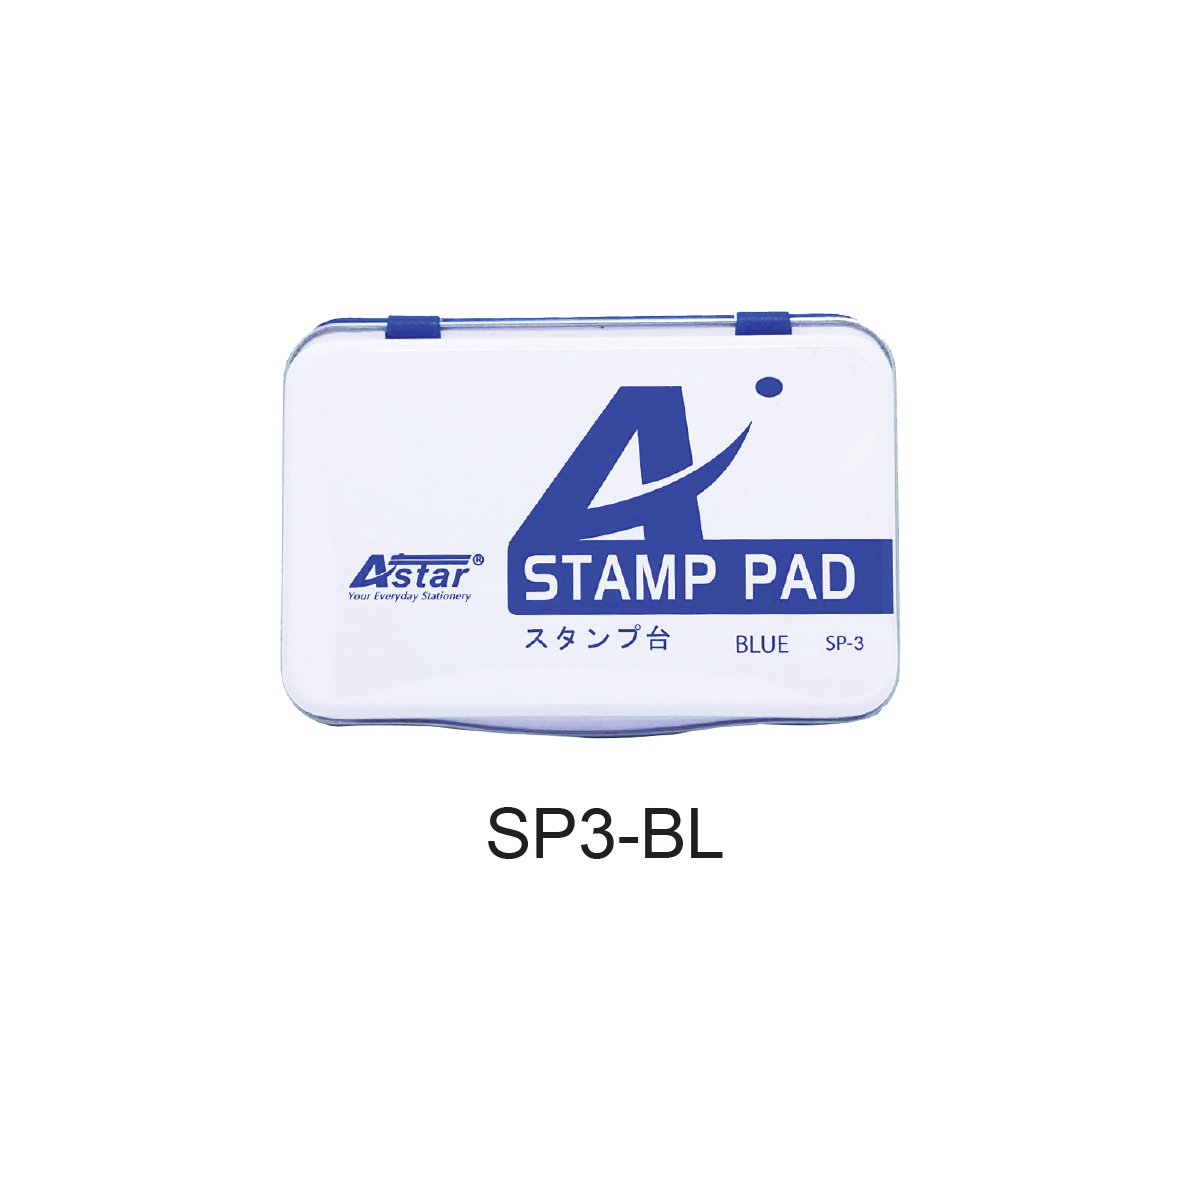 SP3-BL - ASTAR STAMP PAD